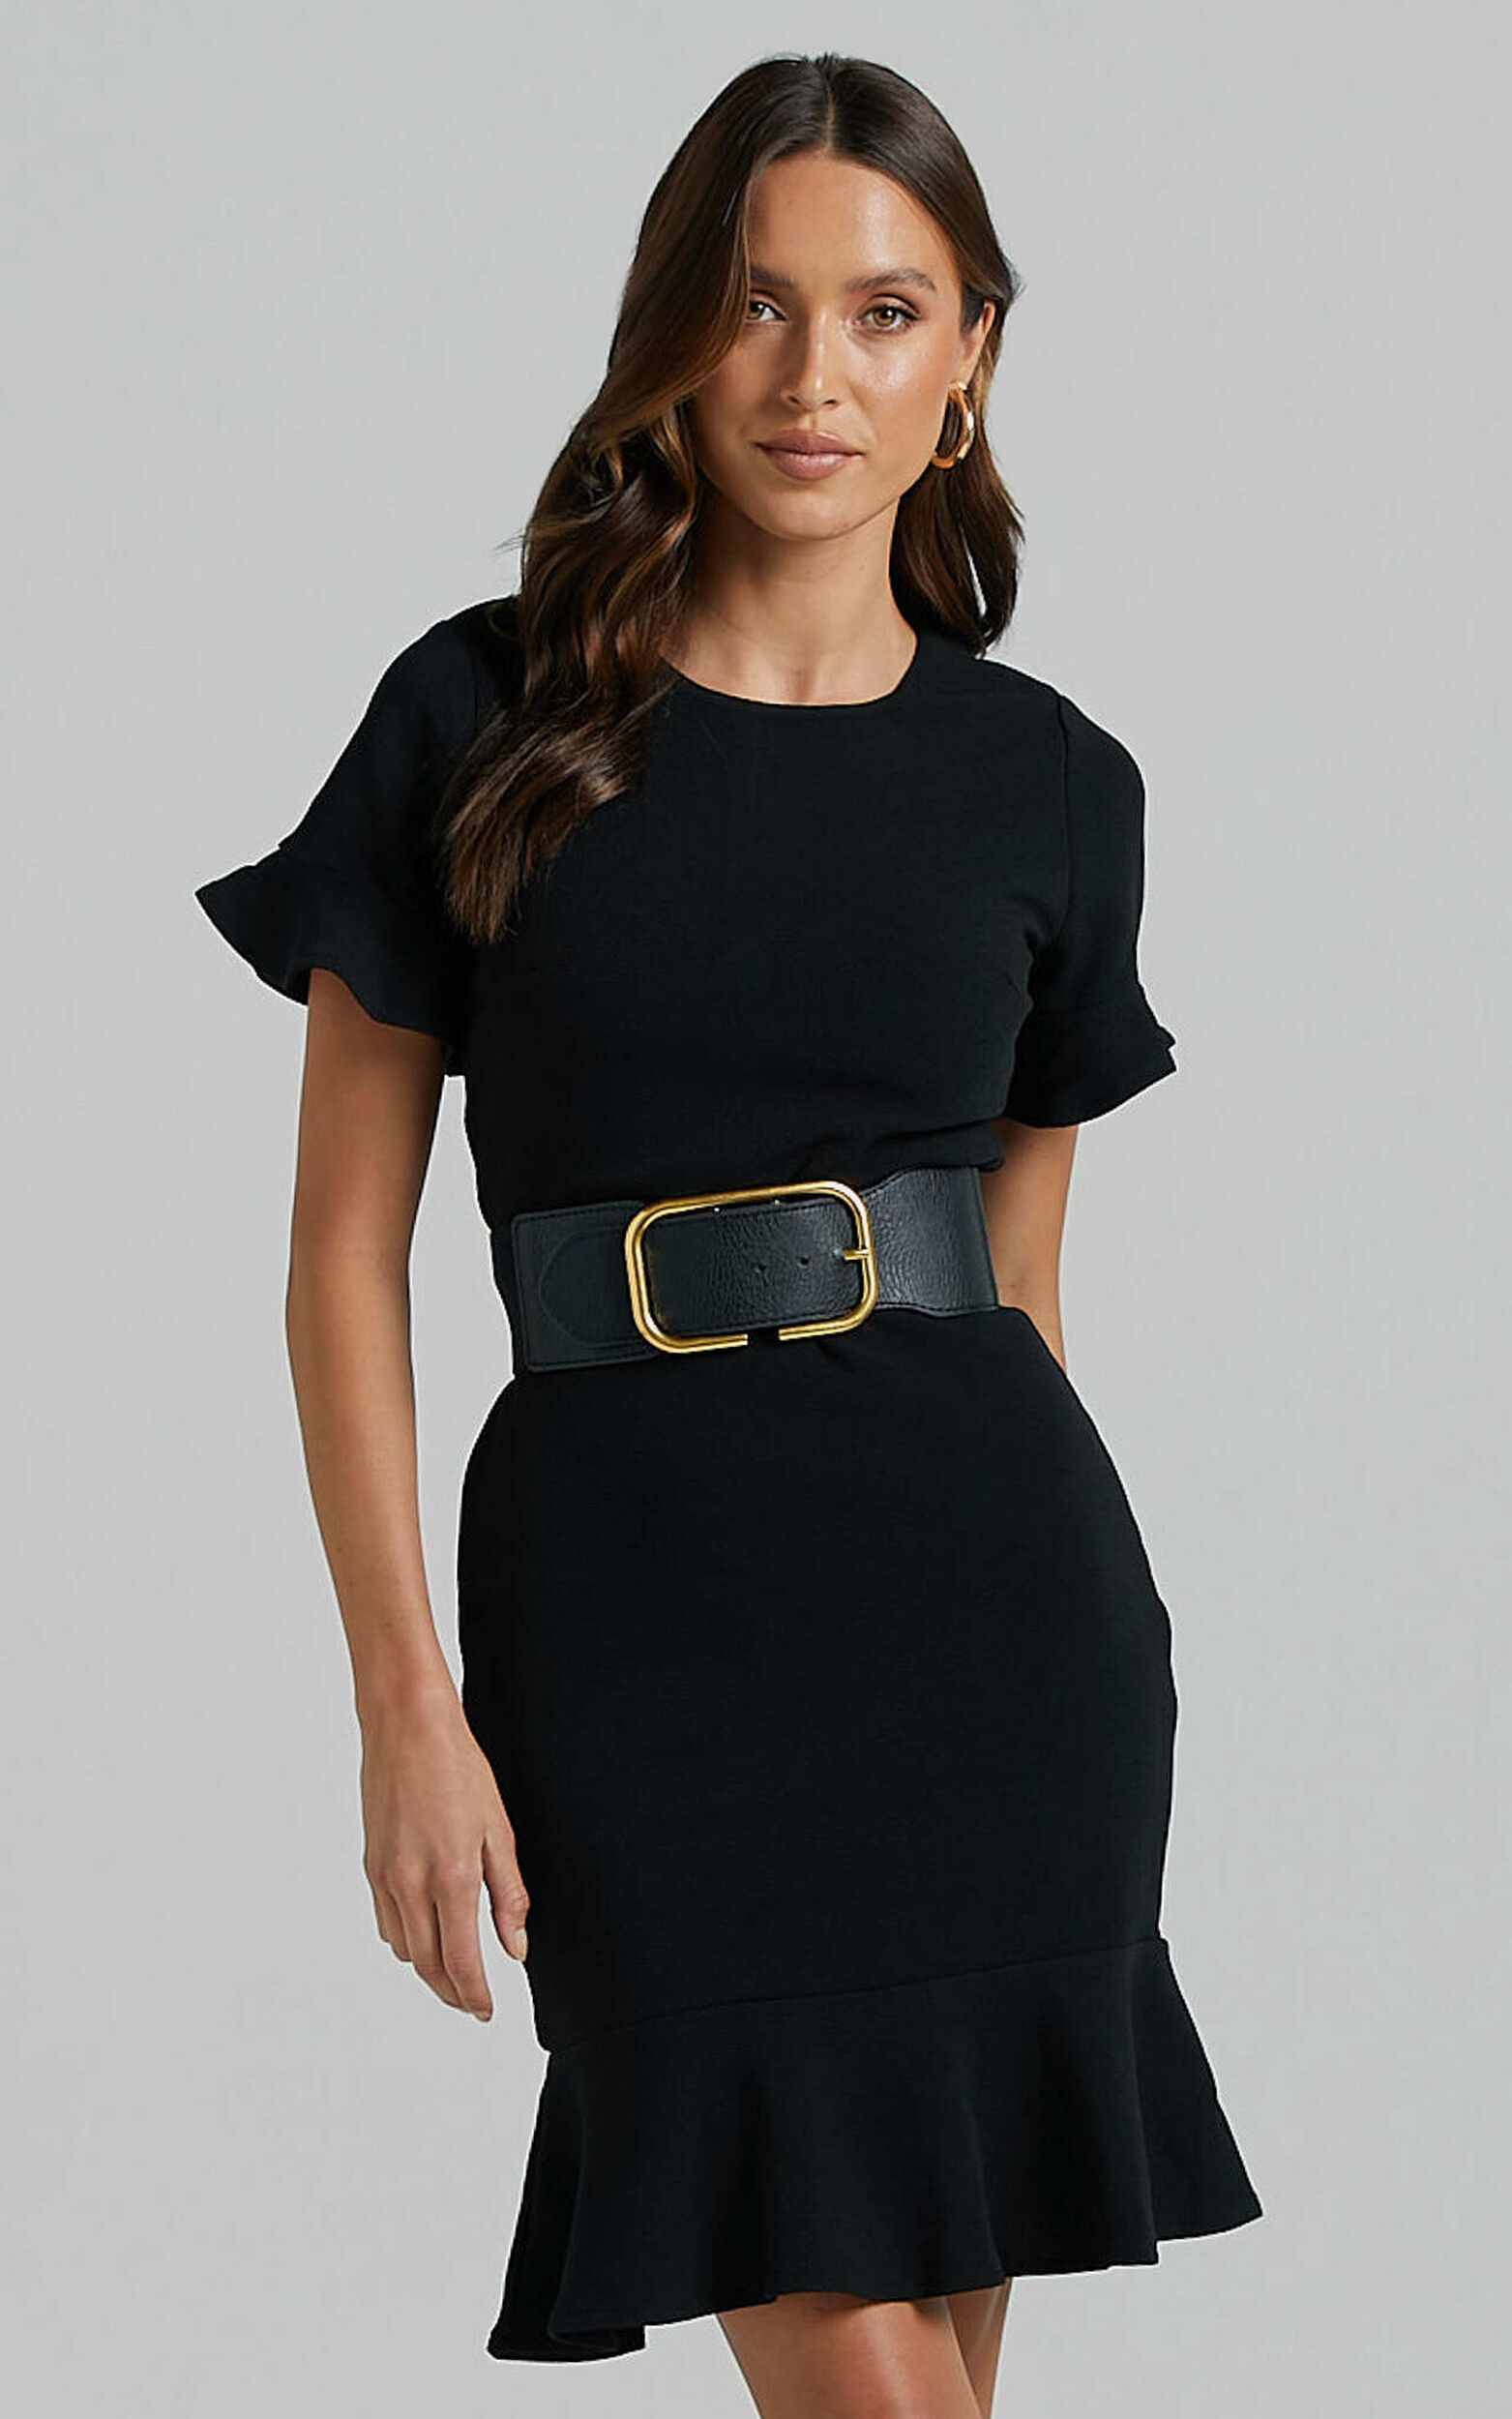 Authority Mini Dress - Peplum Scoop Neck Short Sleeve Frill Dress in Black - 06, BLK1